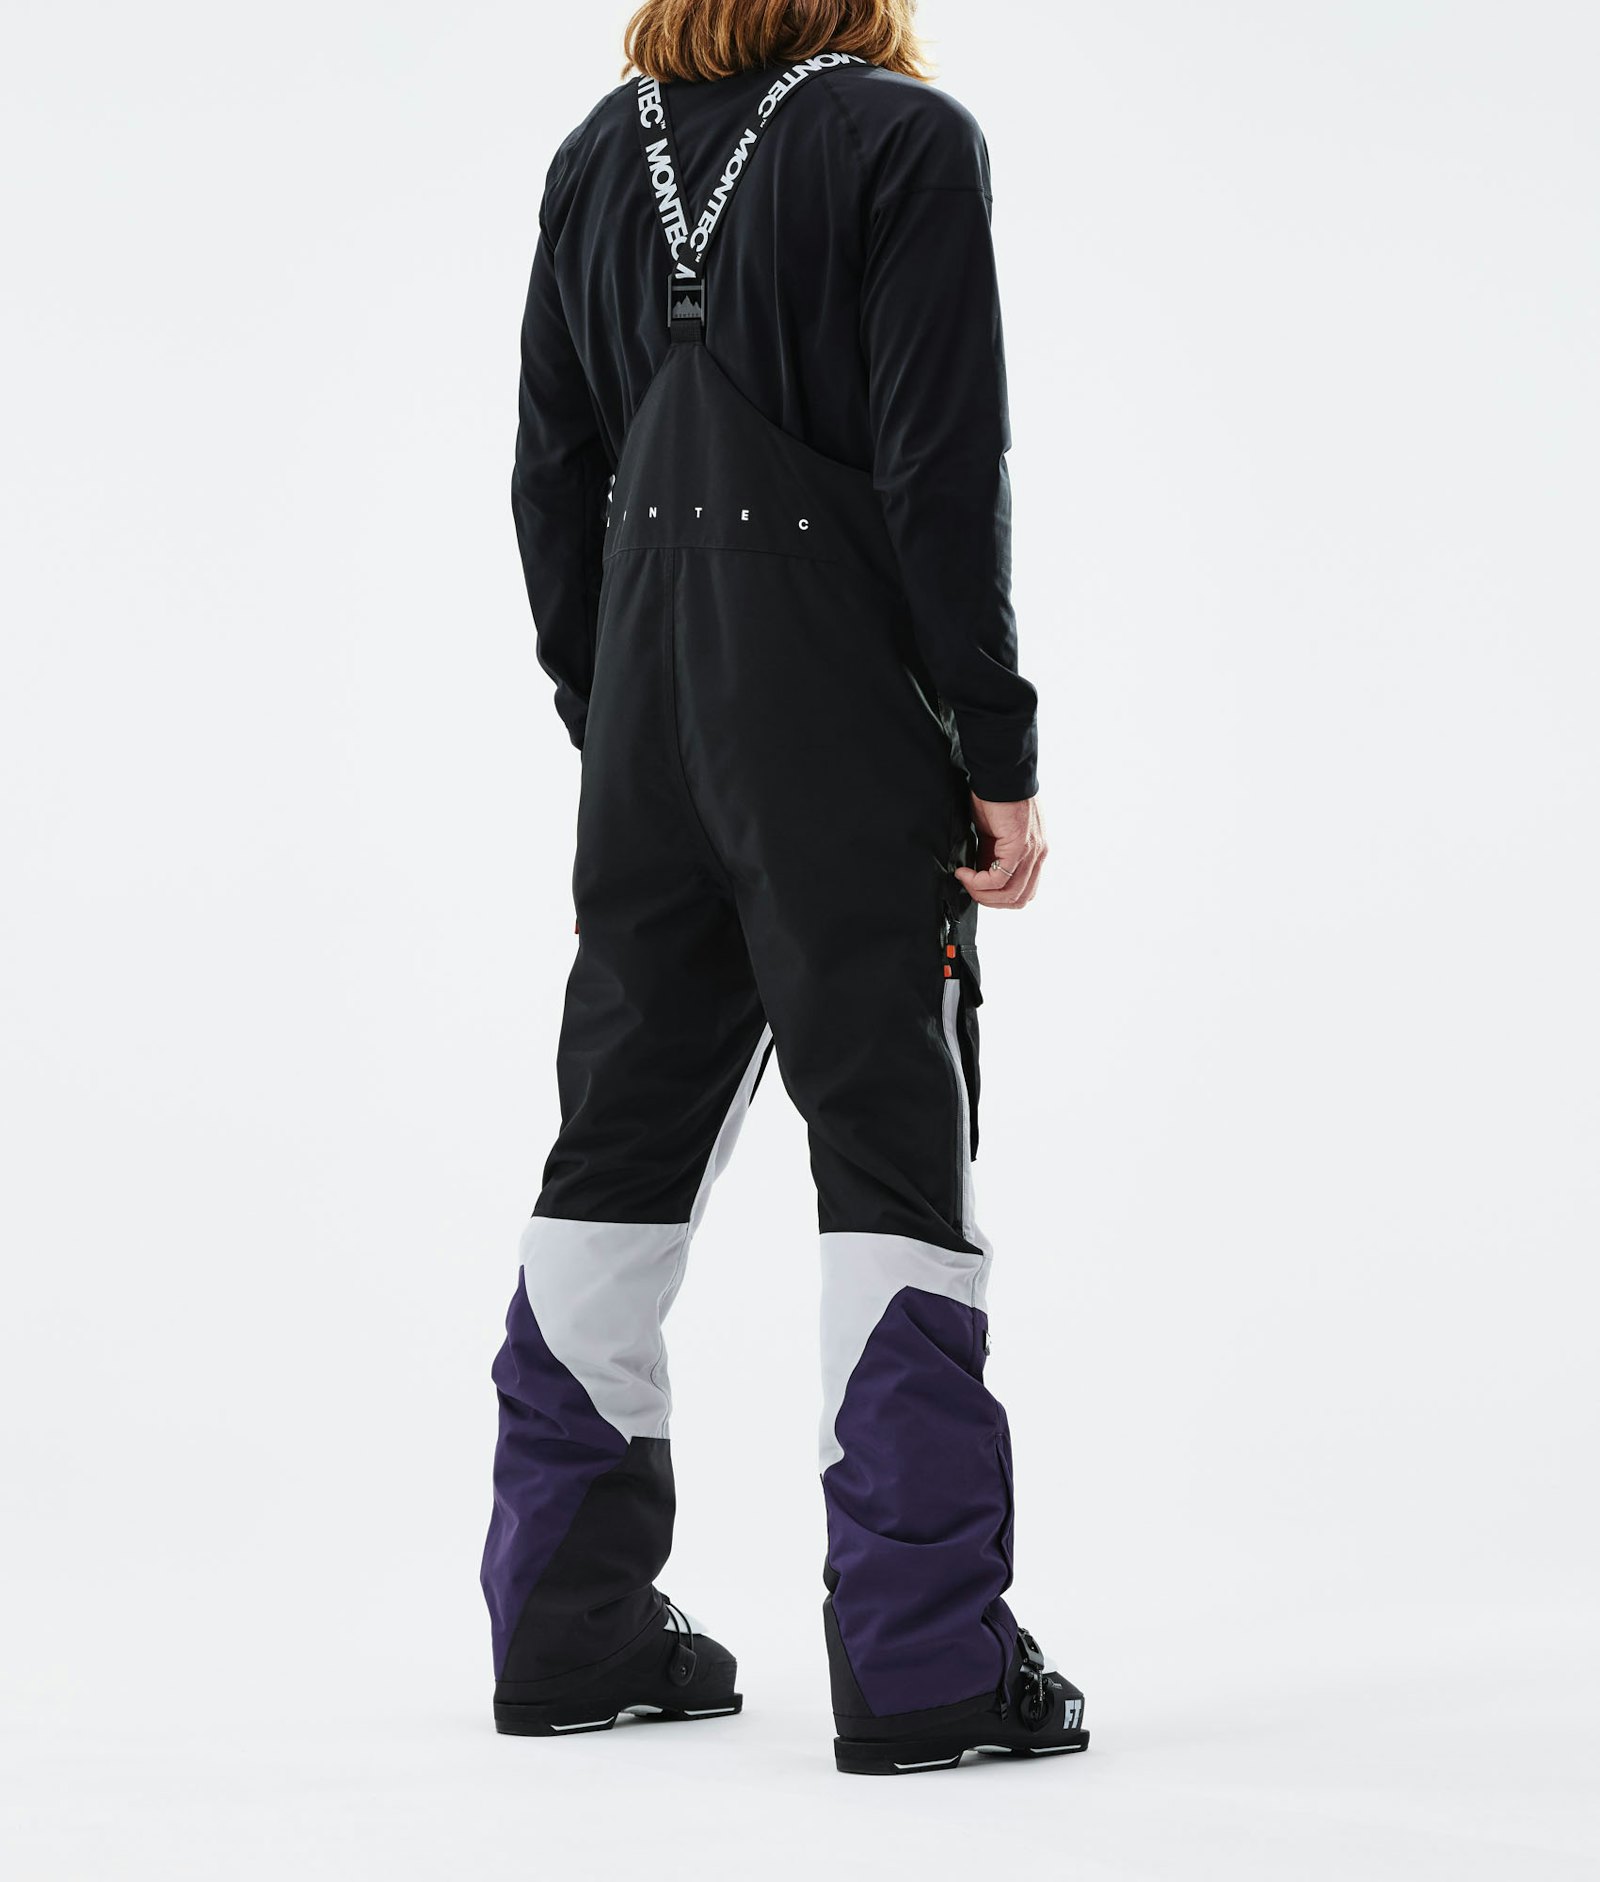 Fawk 2021 Pantalon de Ski Homme Black/Light Grey/Purple